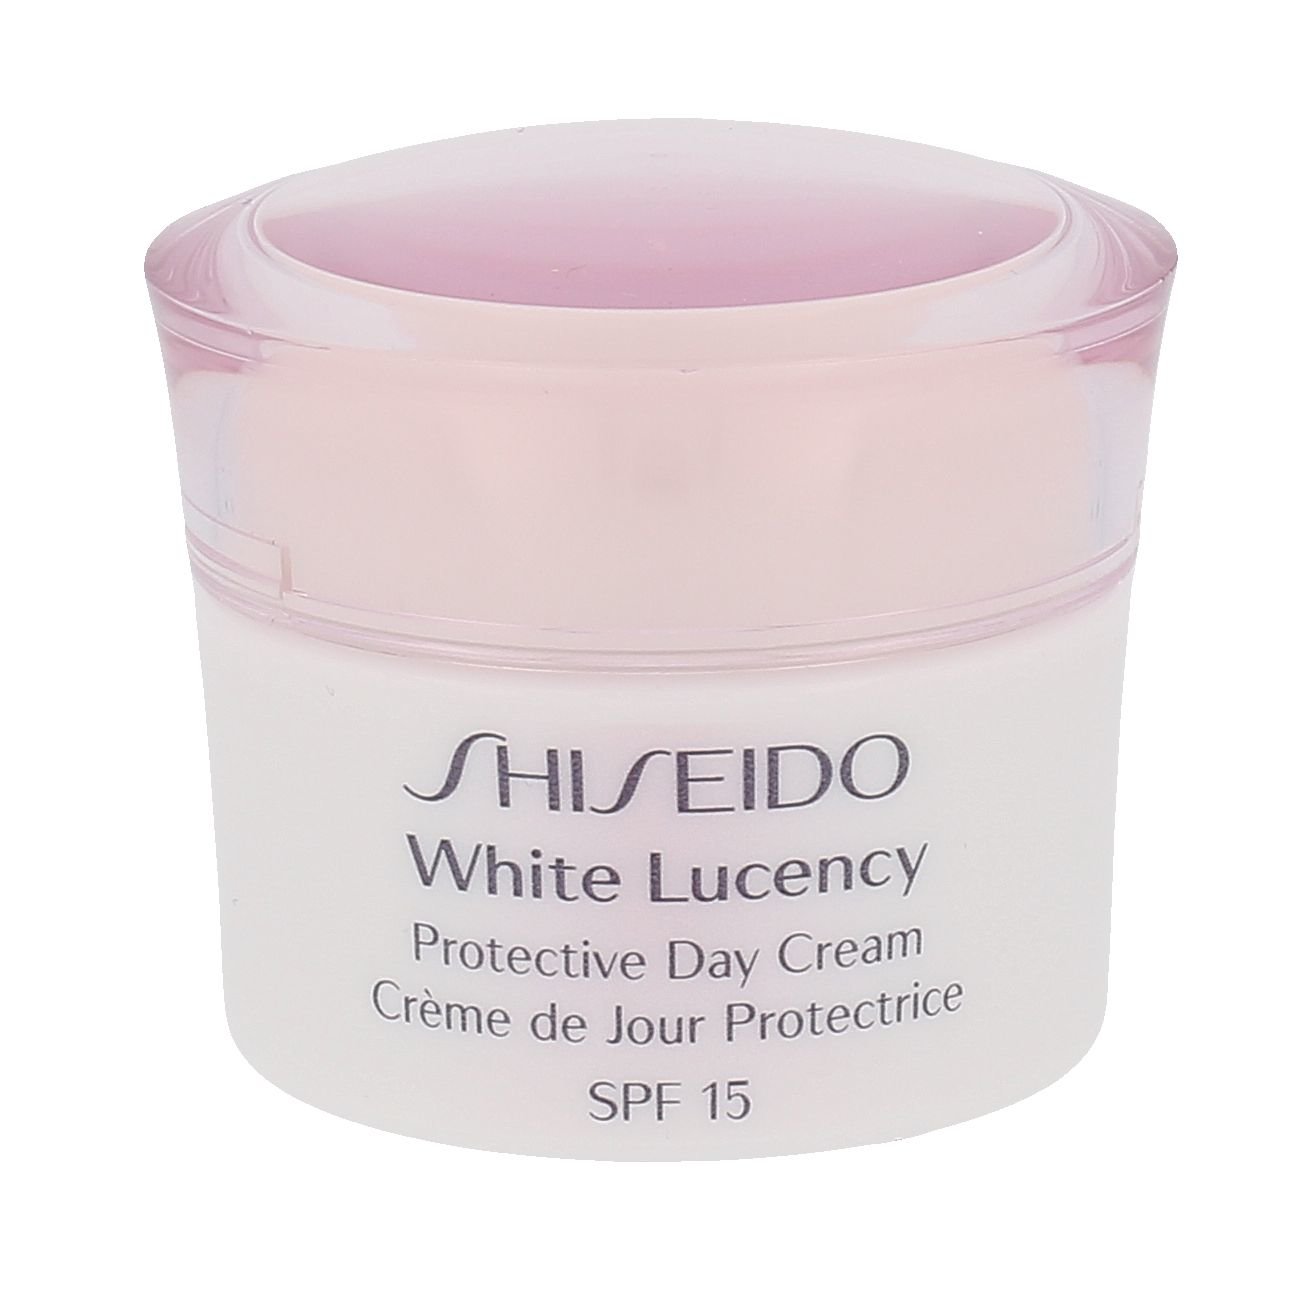 Shiseido White Lucency Protective Day Cream SPF15